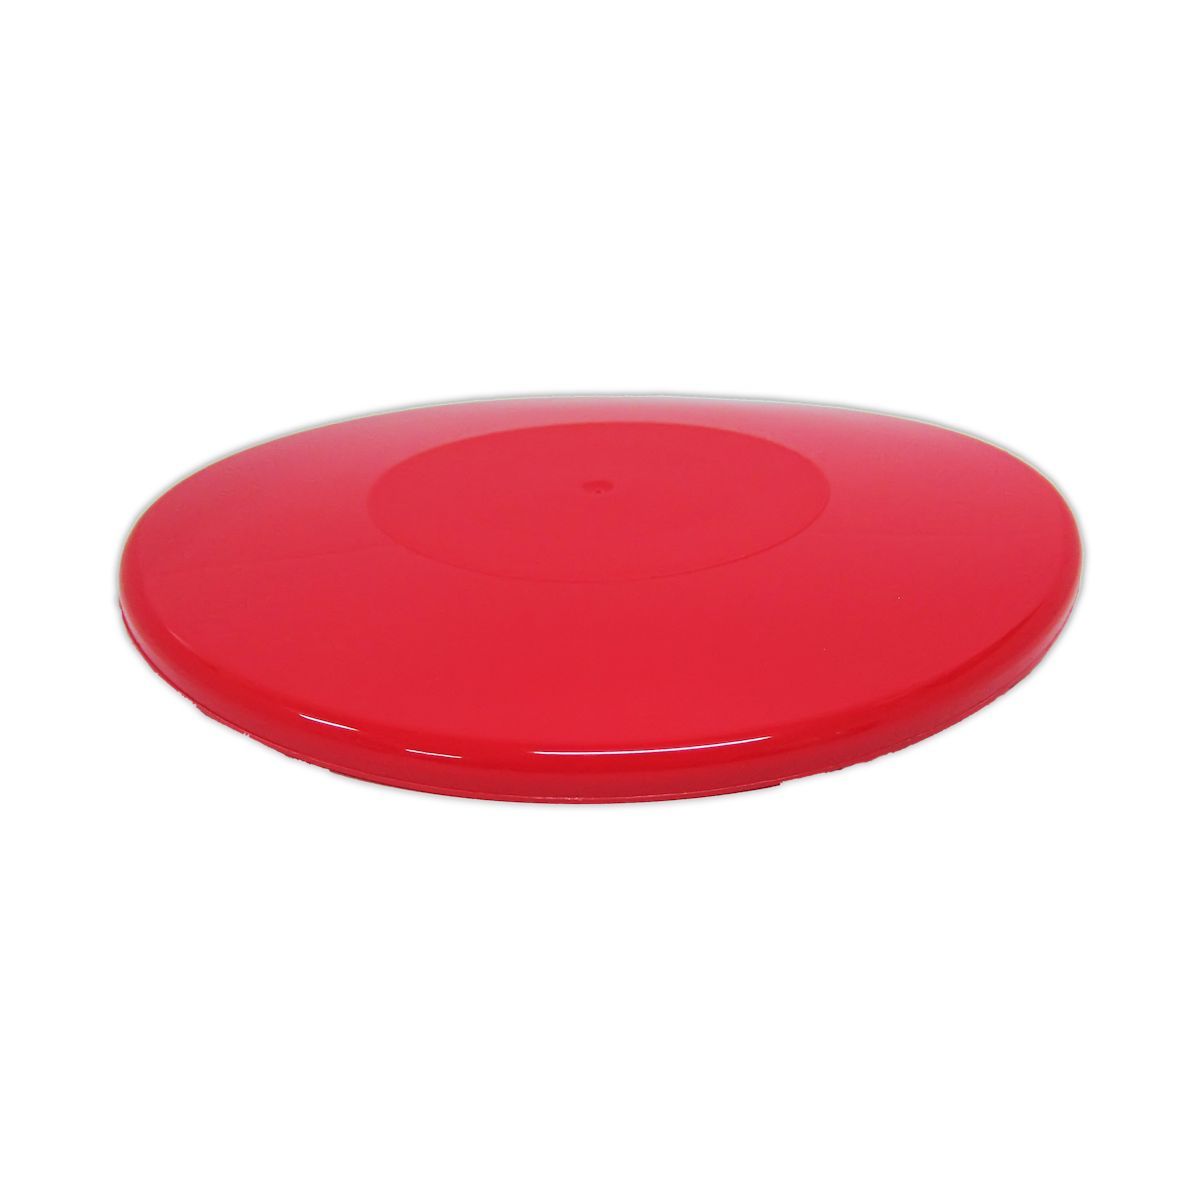 PUDB2225L - 2lb Red Pudding Bowl Lids x 25